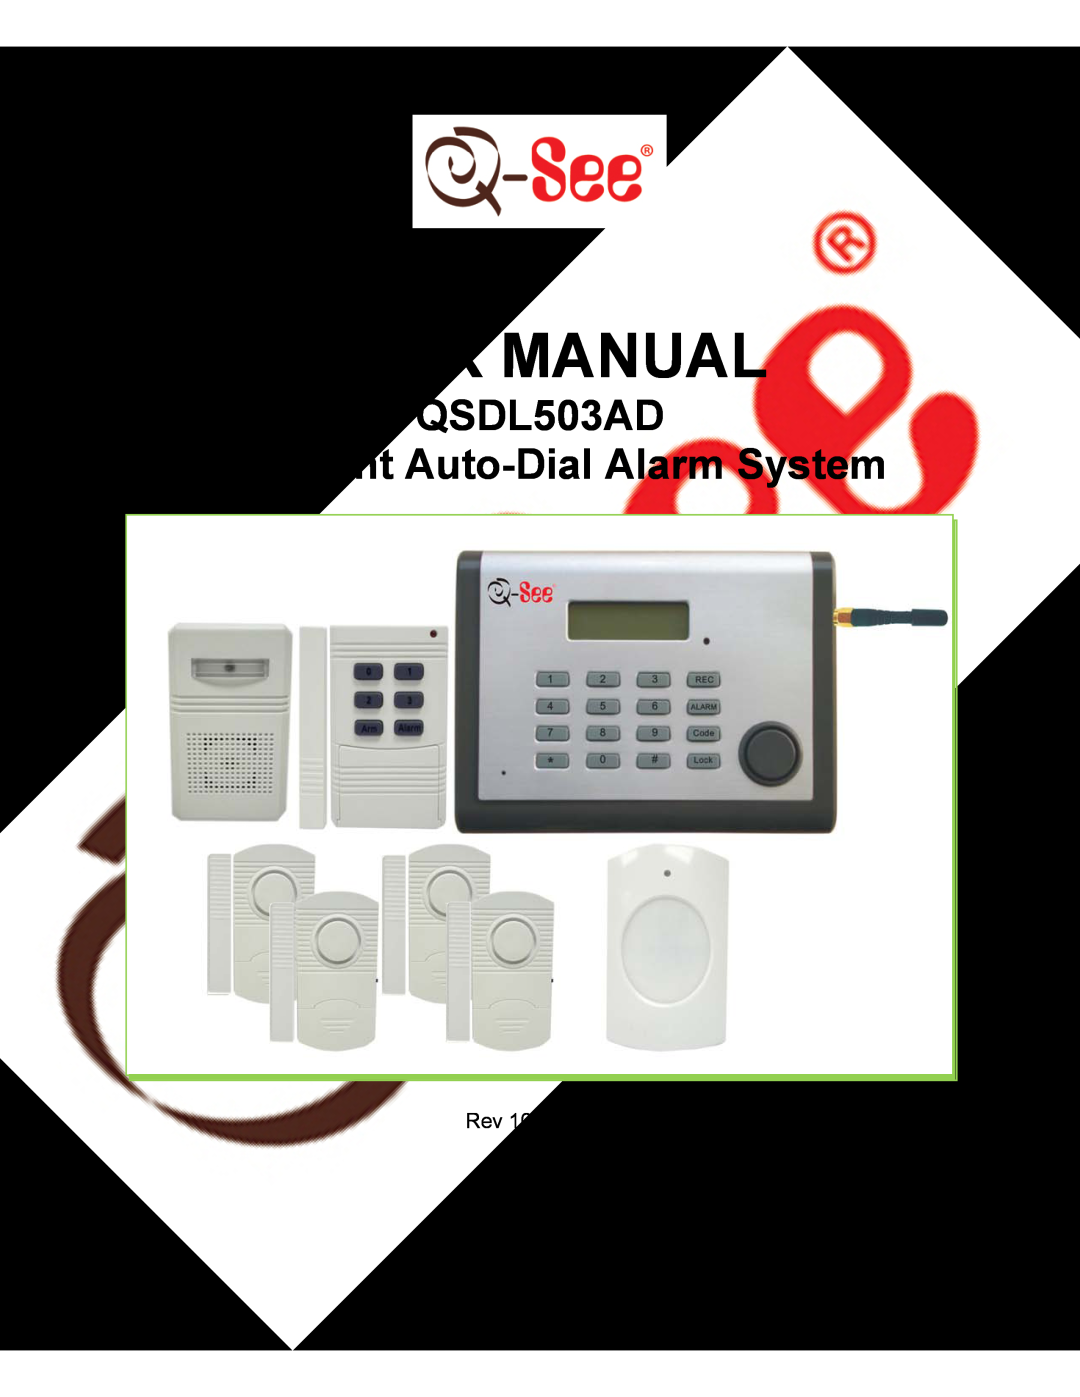 Q-See user manual QSDL503AD Intelligent Auto-DialAlarm System 